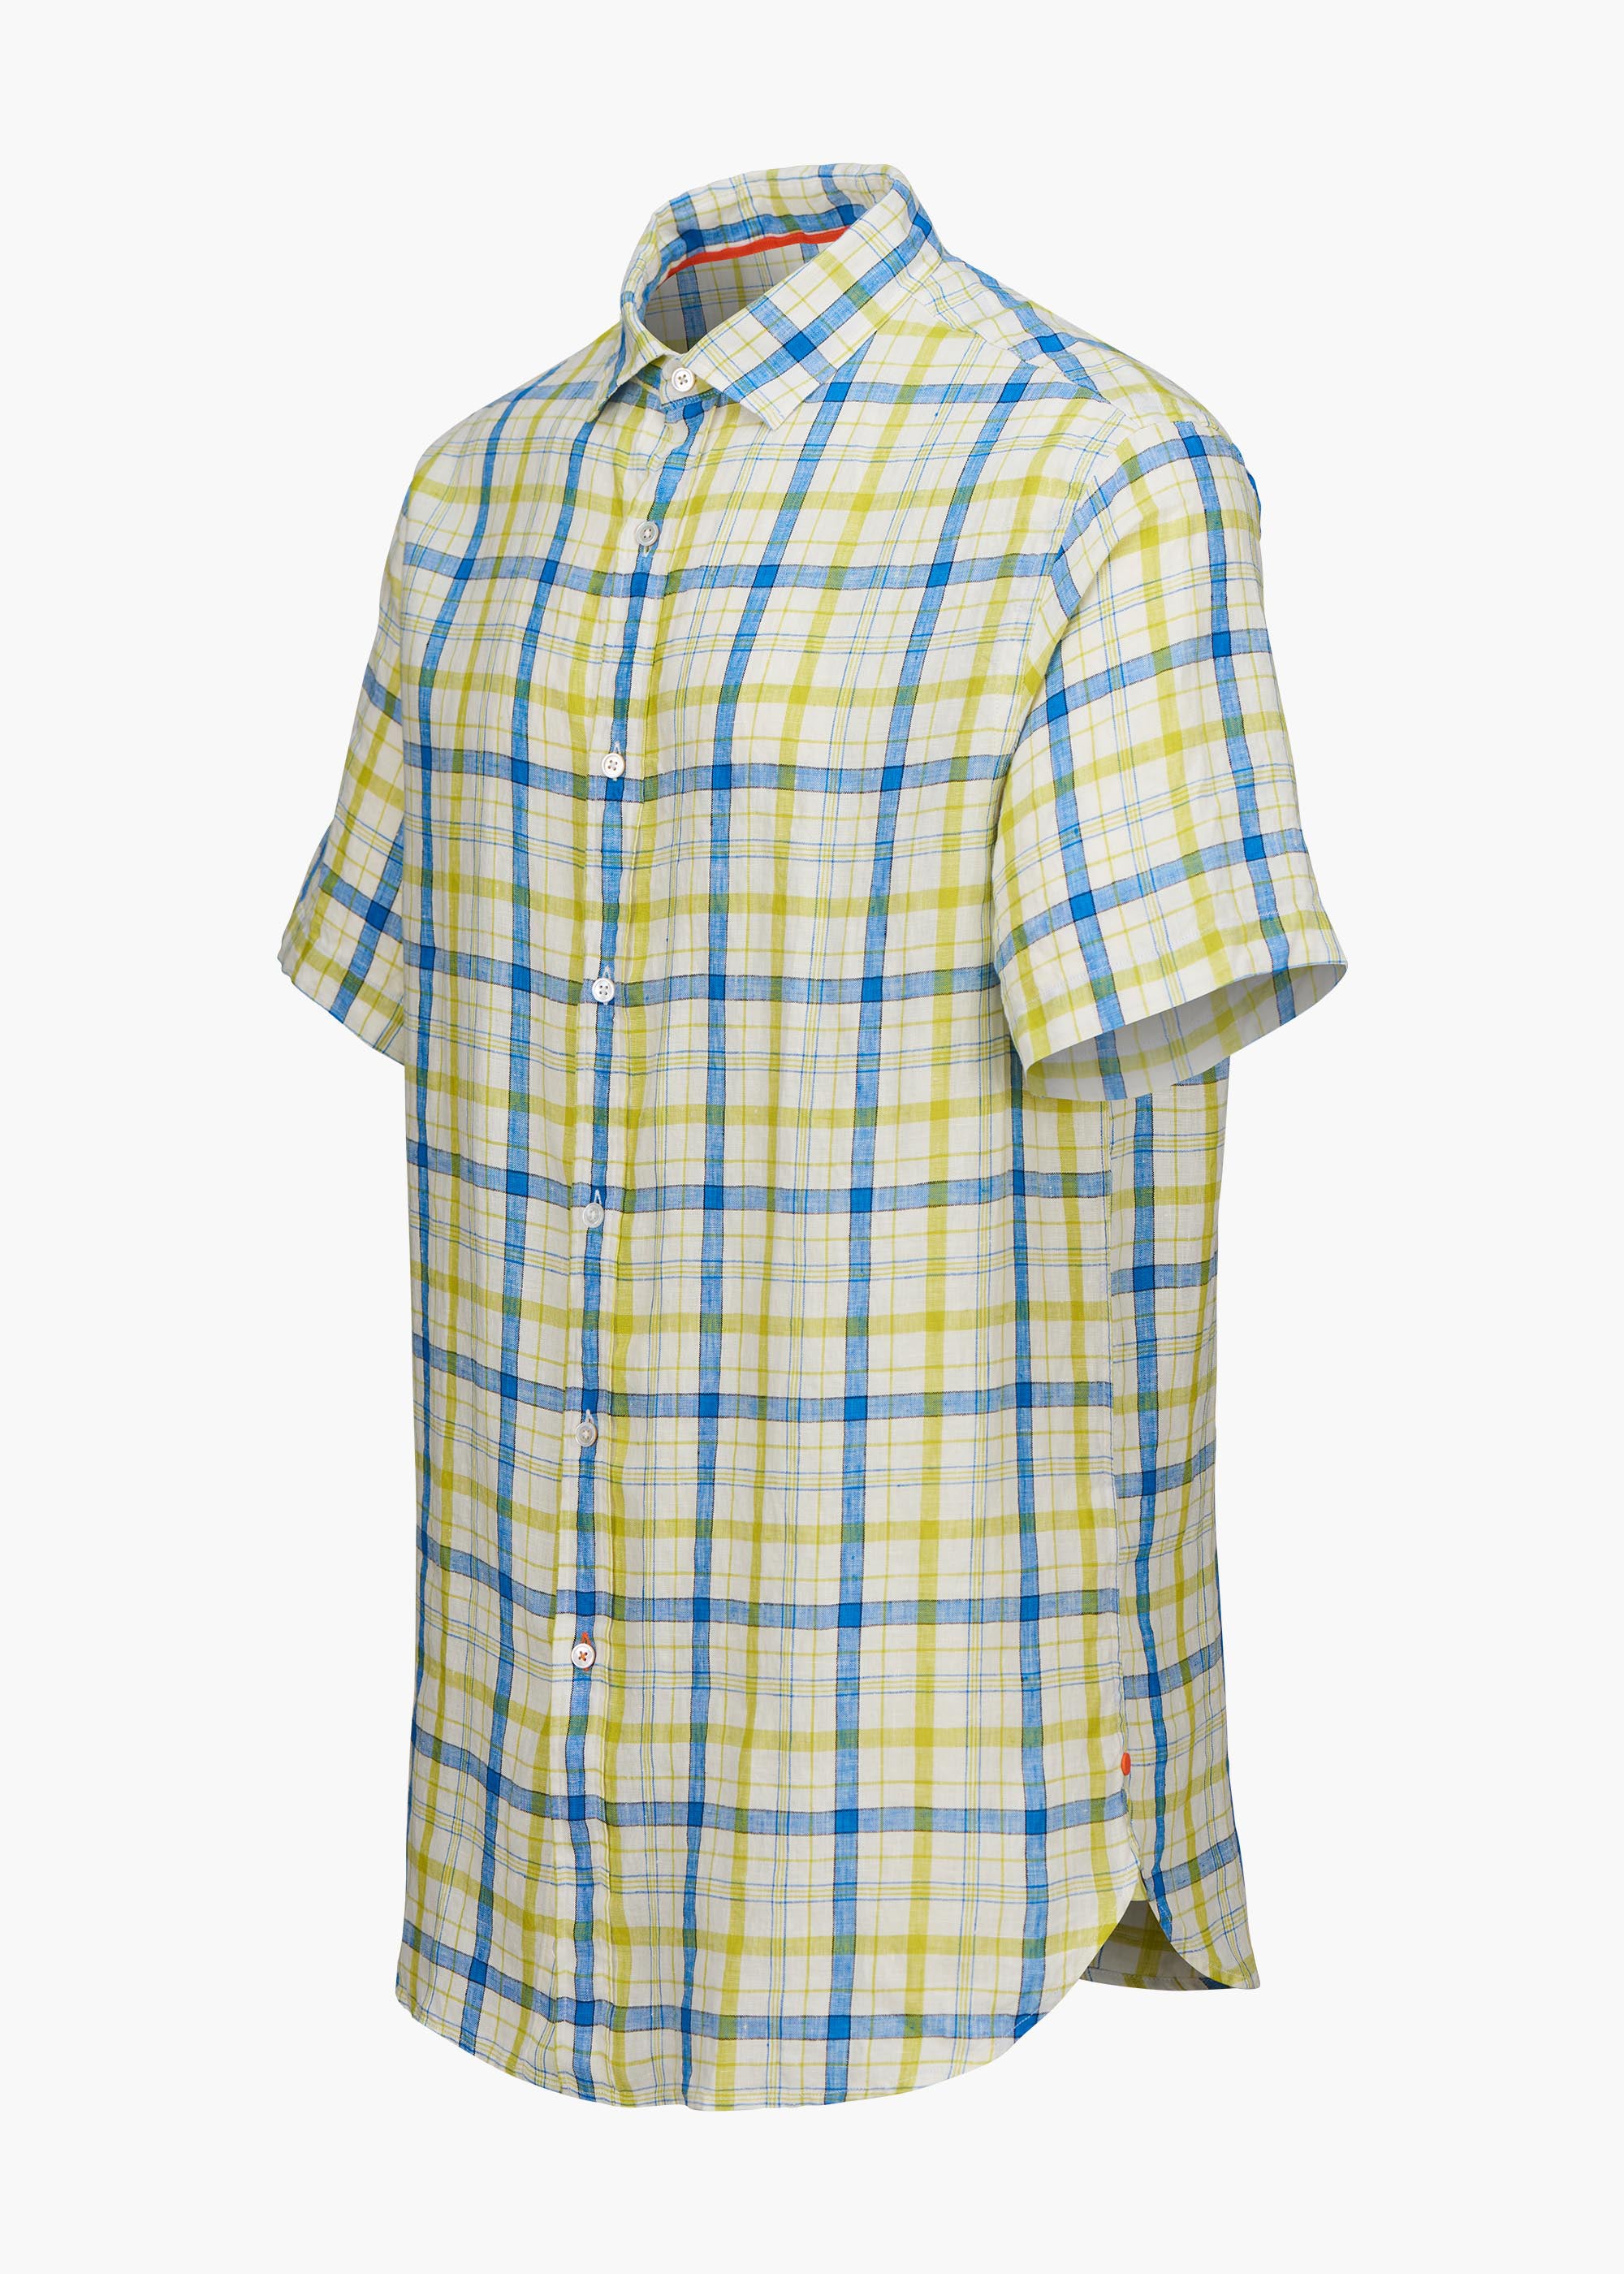 Ischia Woven Shirt - background::white,variant::Citron